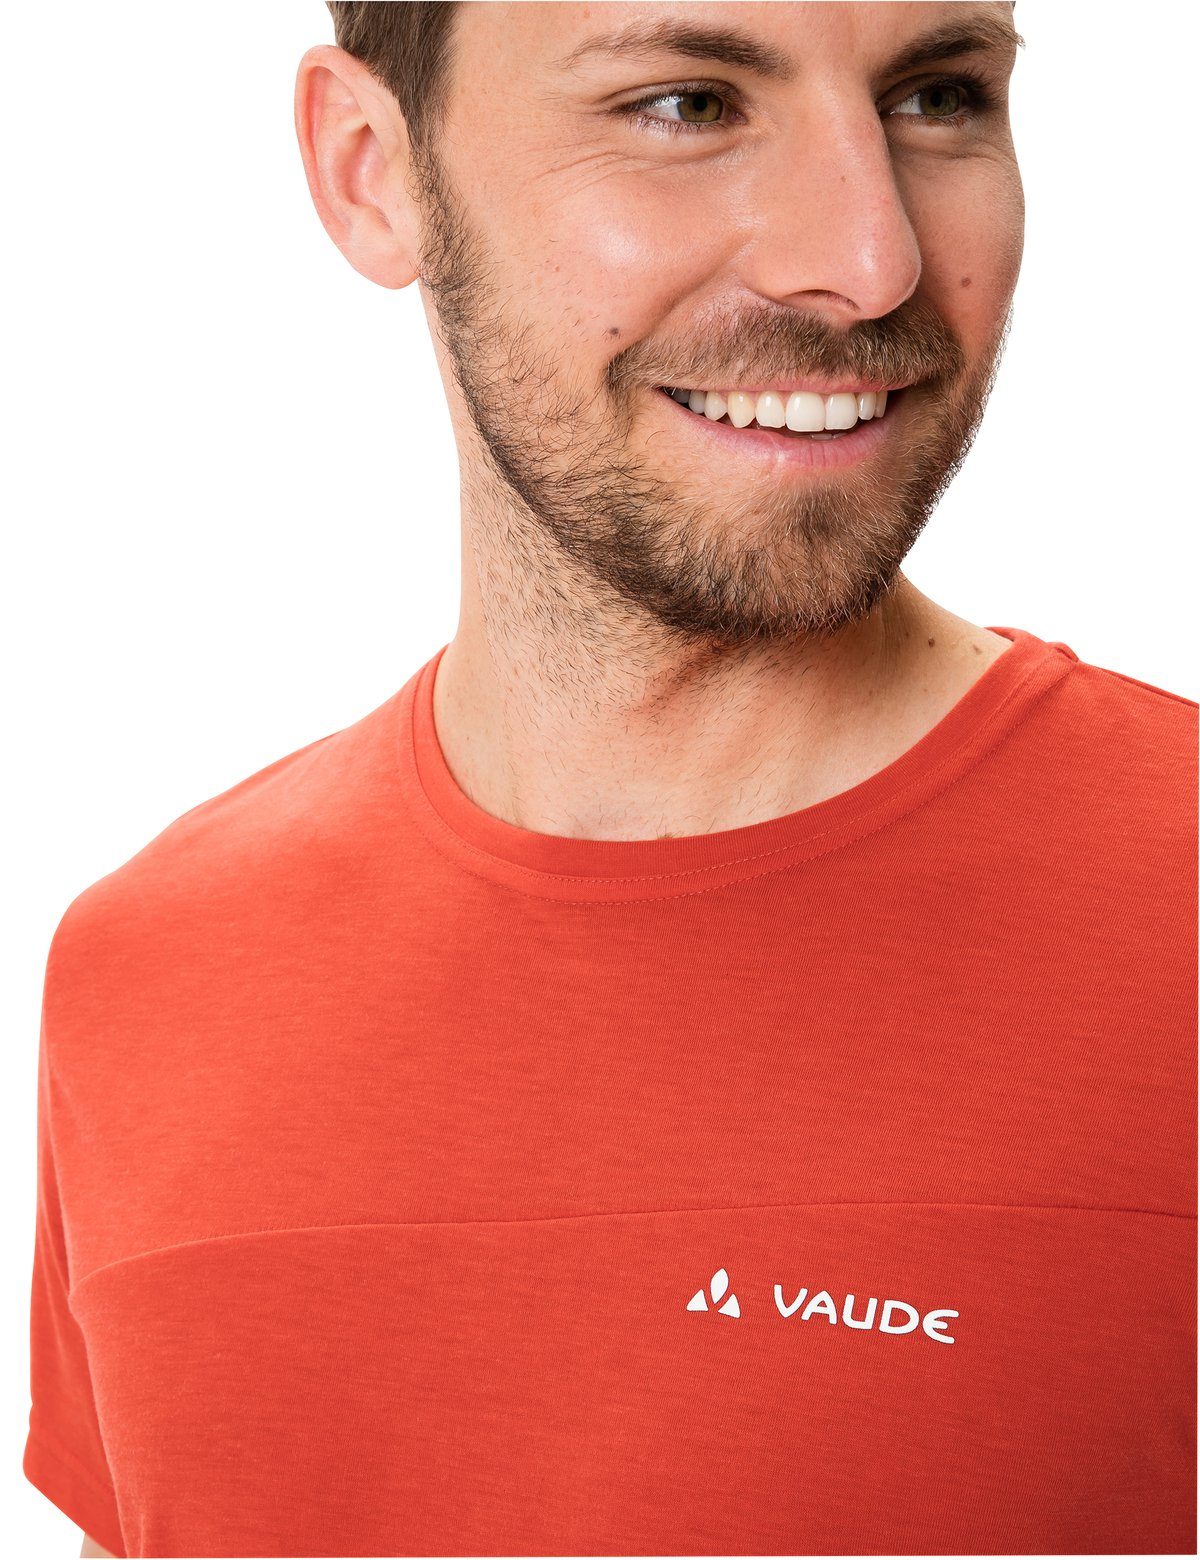 Men's Knopf red glowing (1-tlg) Grüner T-Shirt Sveit VAUDE Shirt